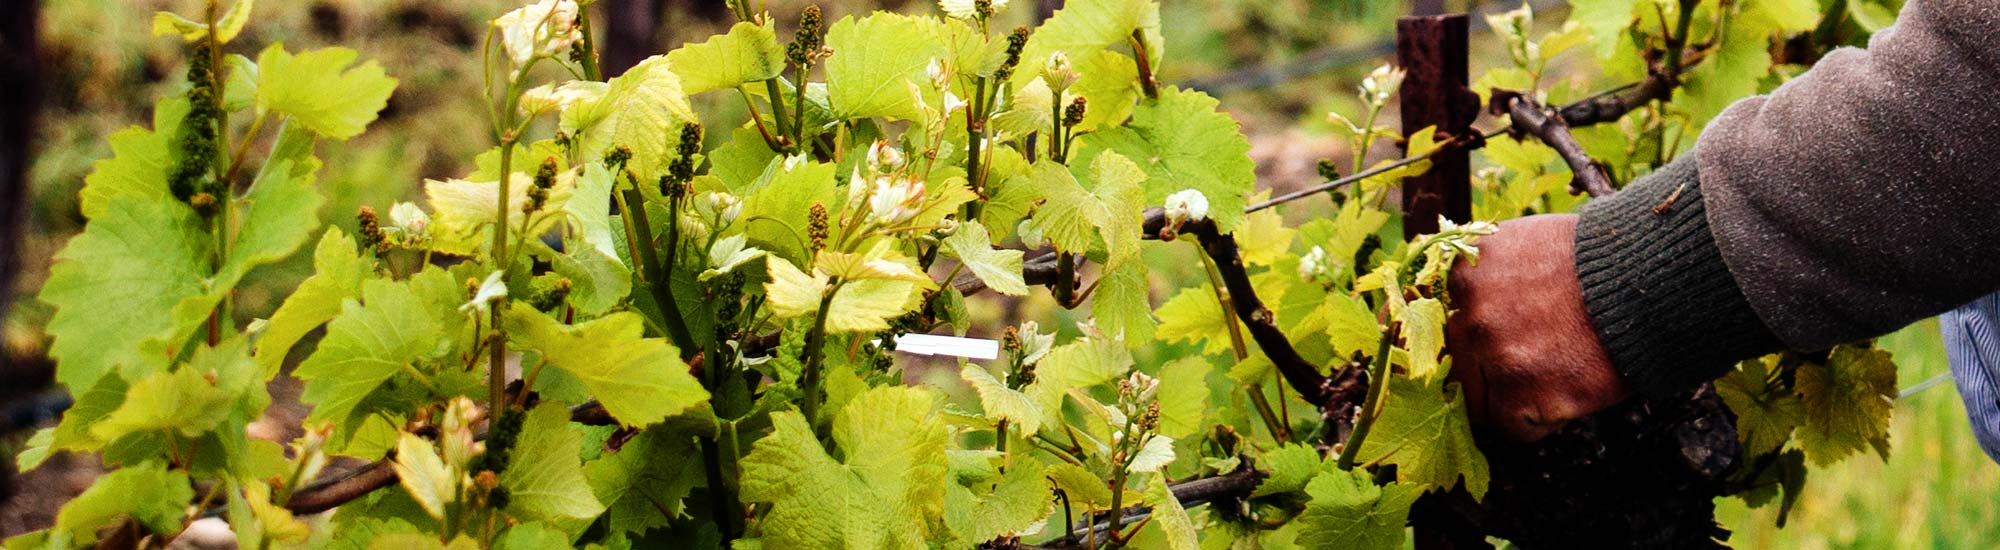 Great Sustainable Wine: J. Wilkes Pinot Blanc